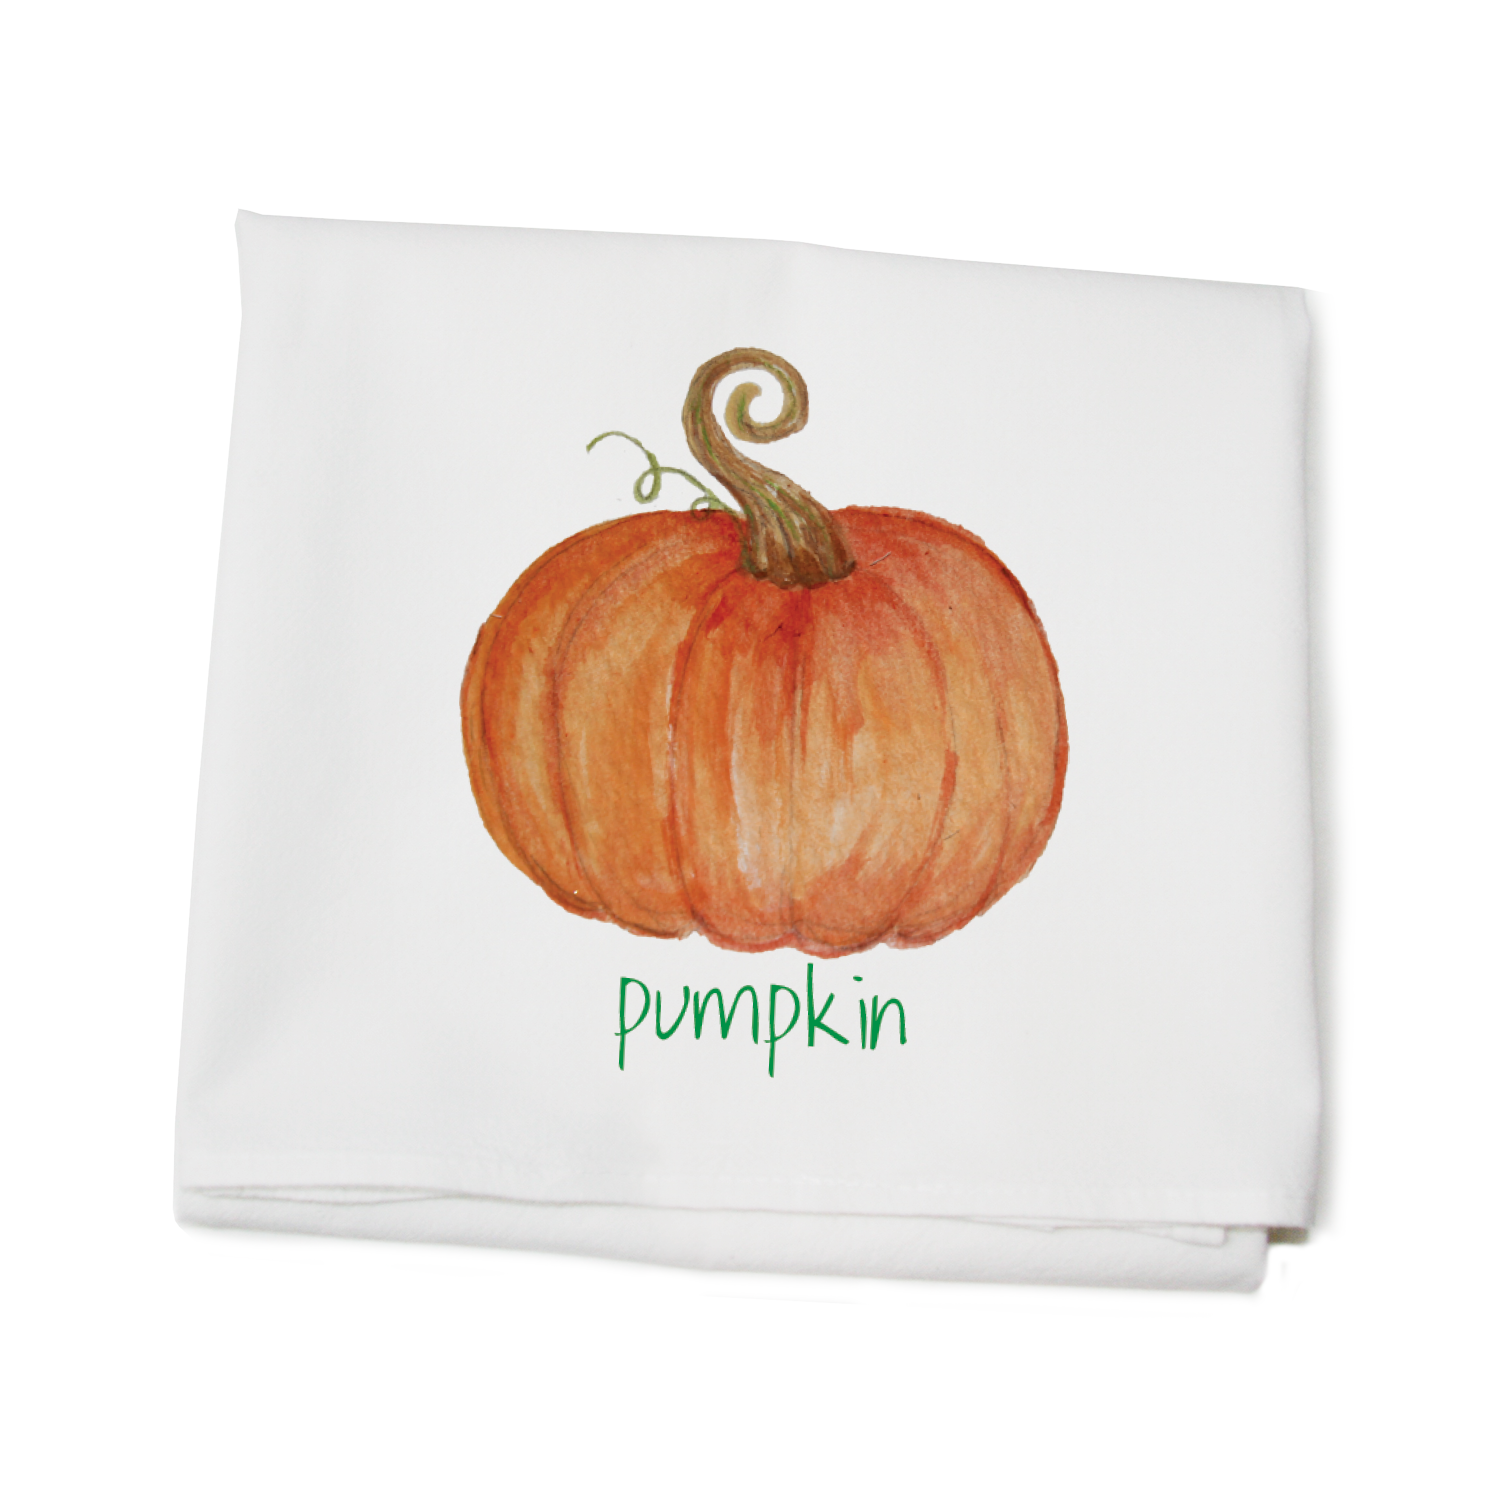 Pumpkin with pumpkin text flour sack towel